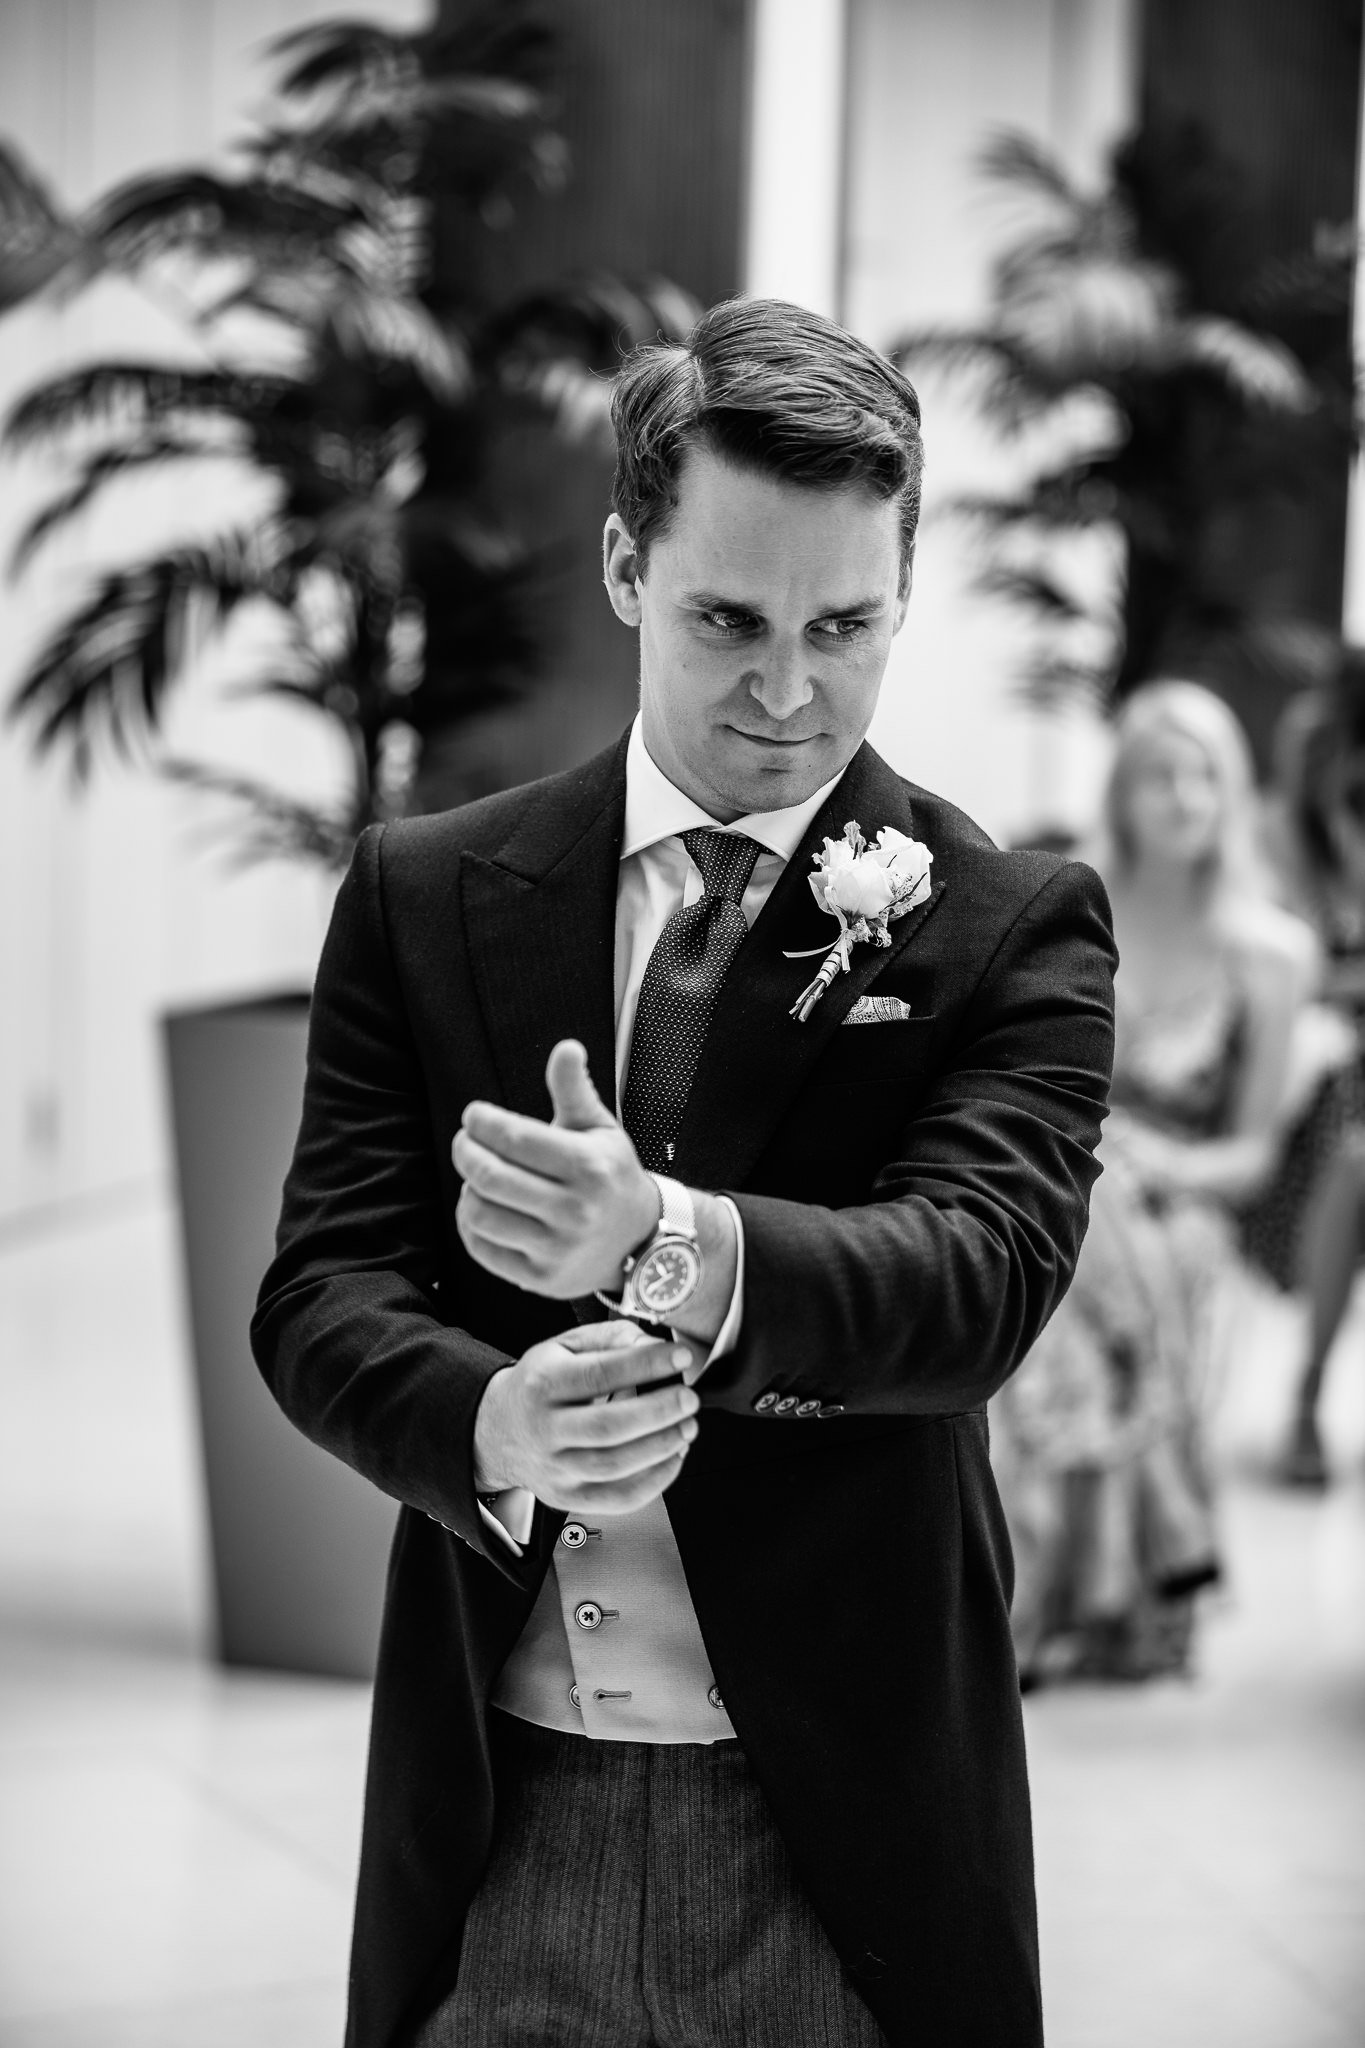  Groom adjusts his cufflinks before the wedding ceremony at Hurlingham Club 